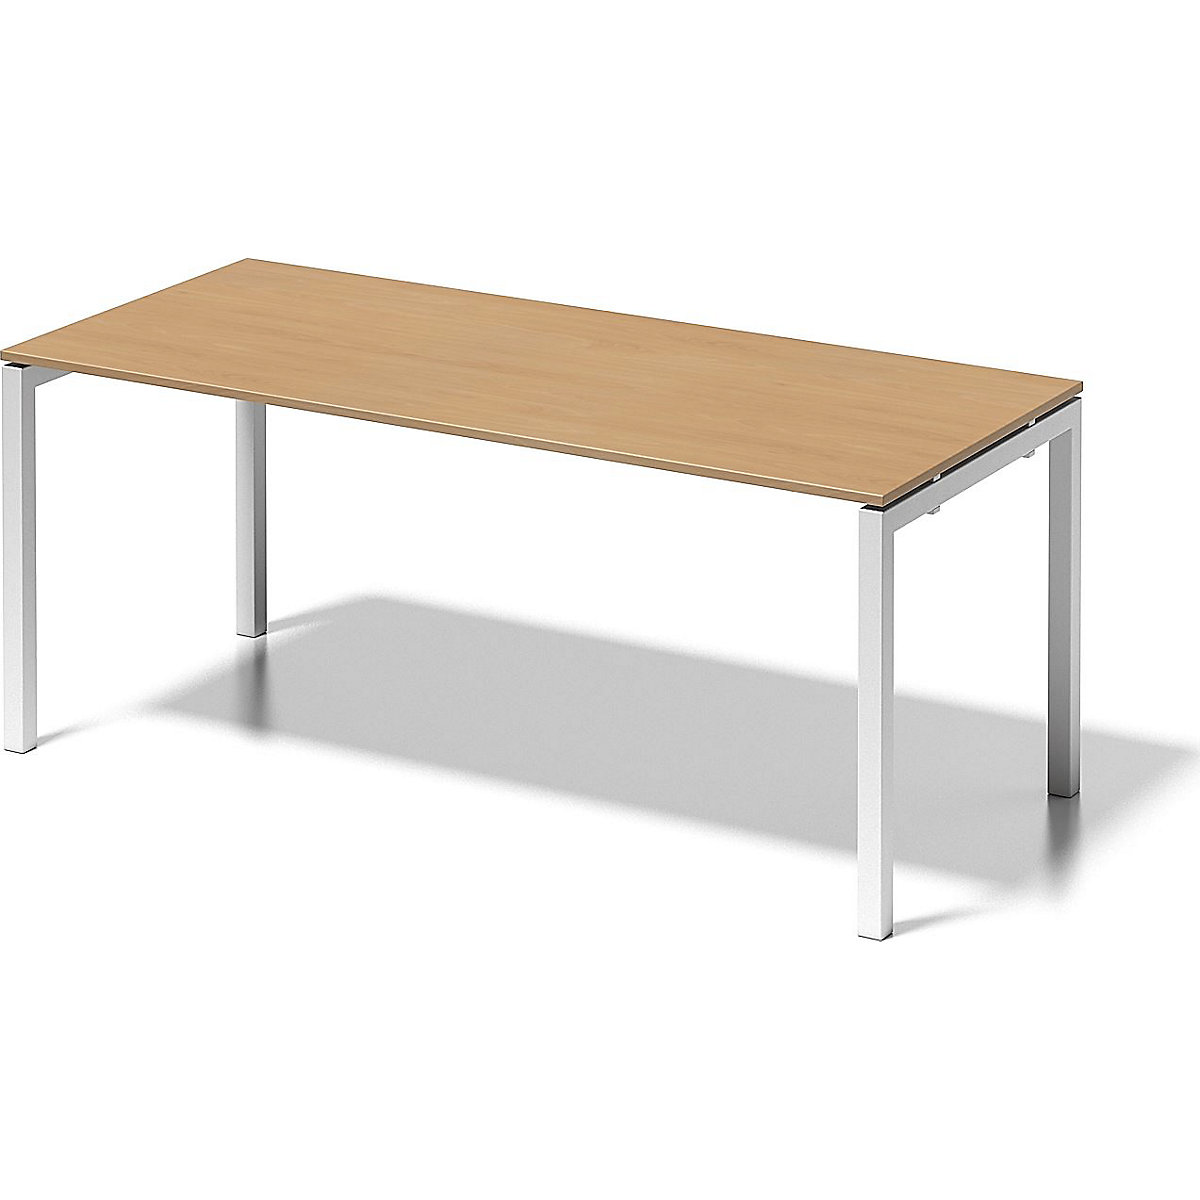 CITO desk, U-frame – BISLEY, HxWxD 740 x 1800 x 800 mm, white frame, beech tabletop-8